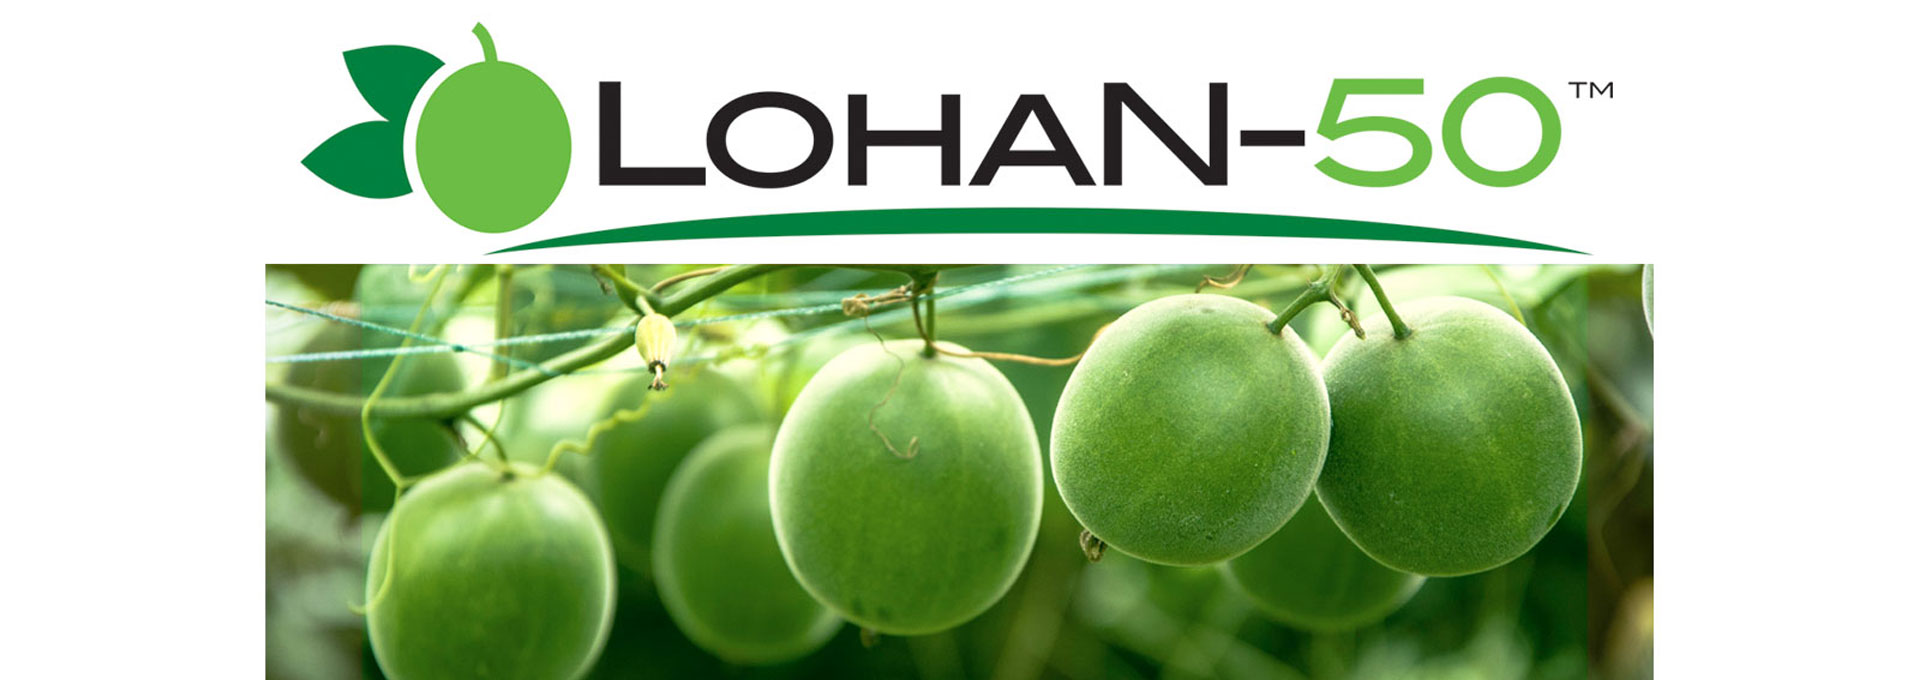 Lohan-50 Banner